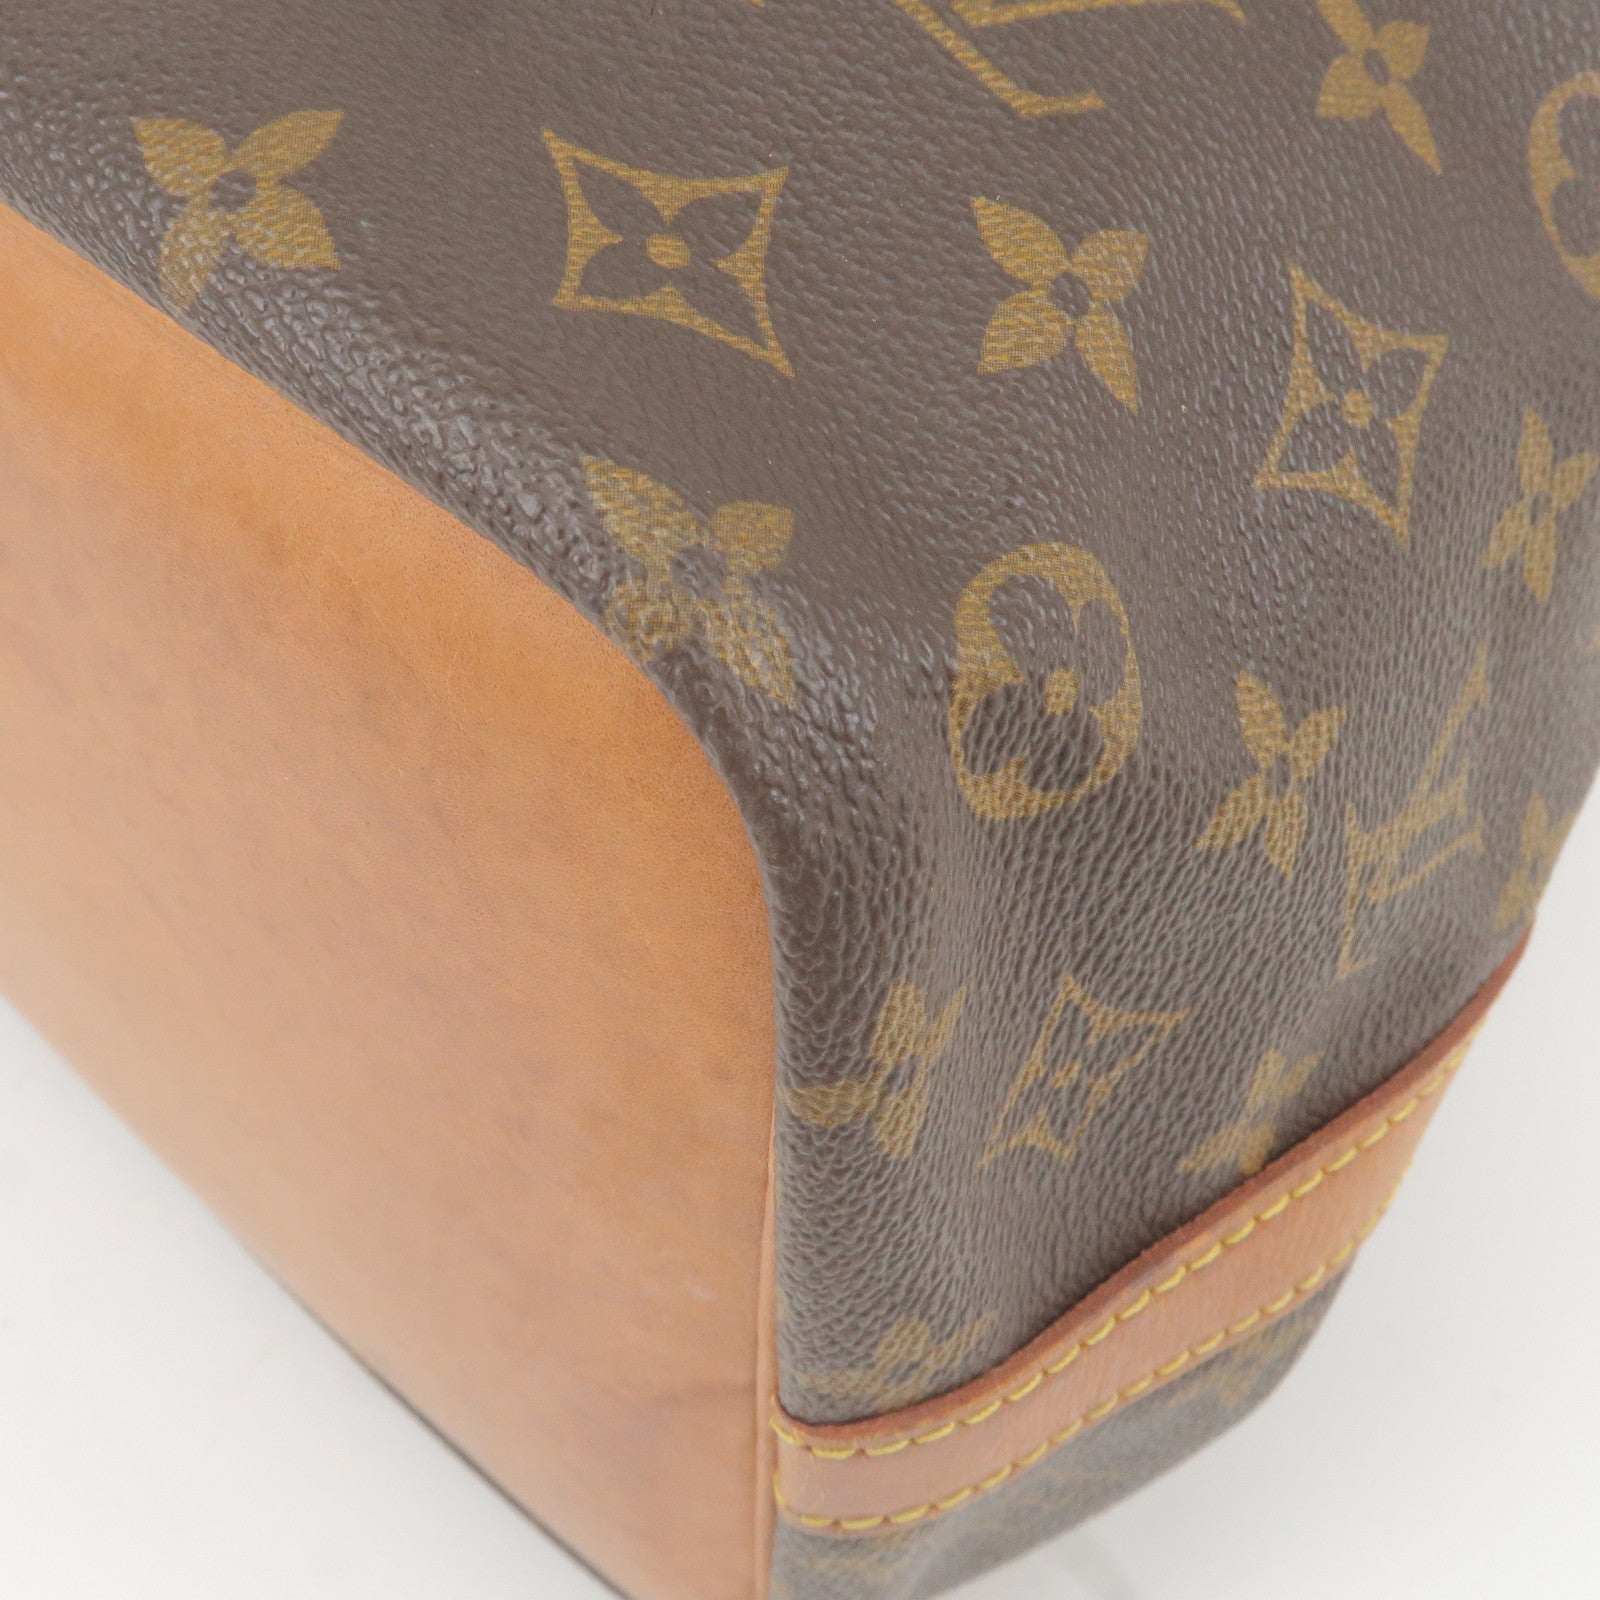 Monogram - Louis - Vuitton - Bag - M51155 – dct - Luco - Tote